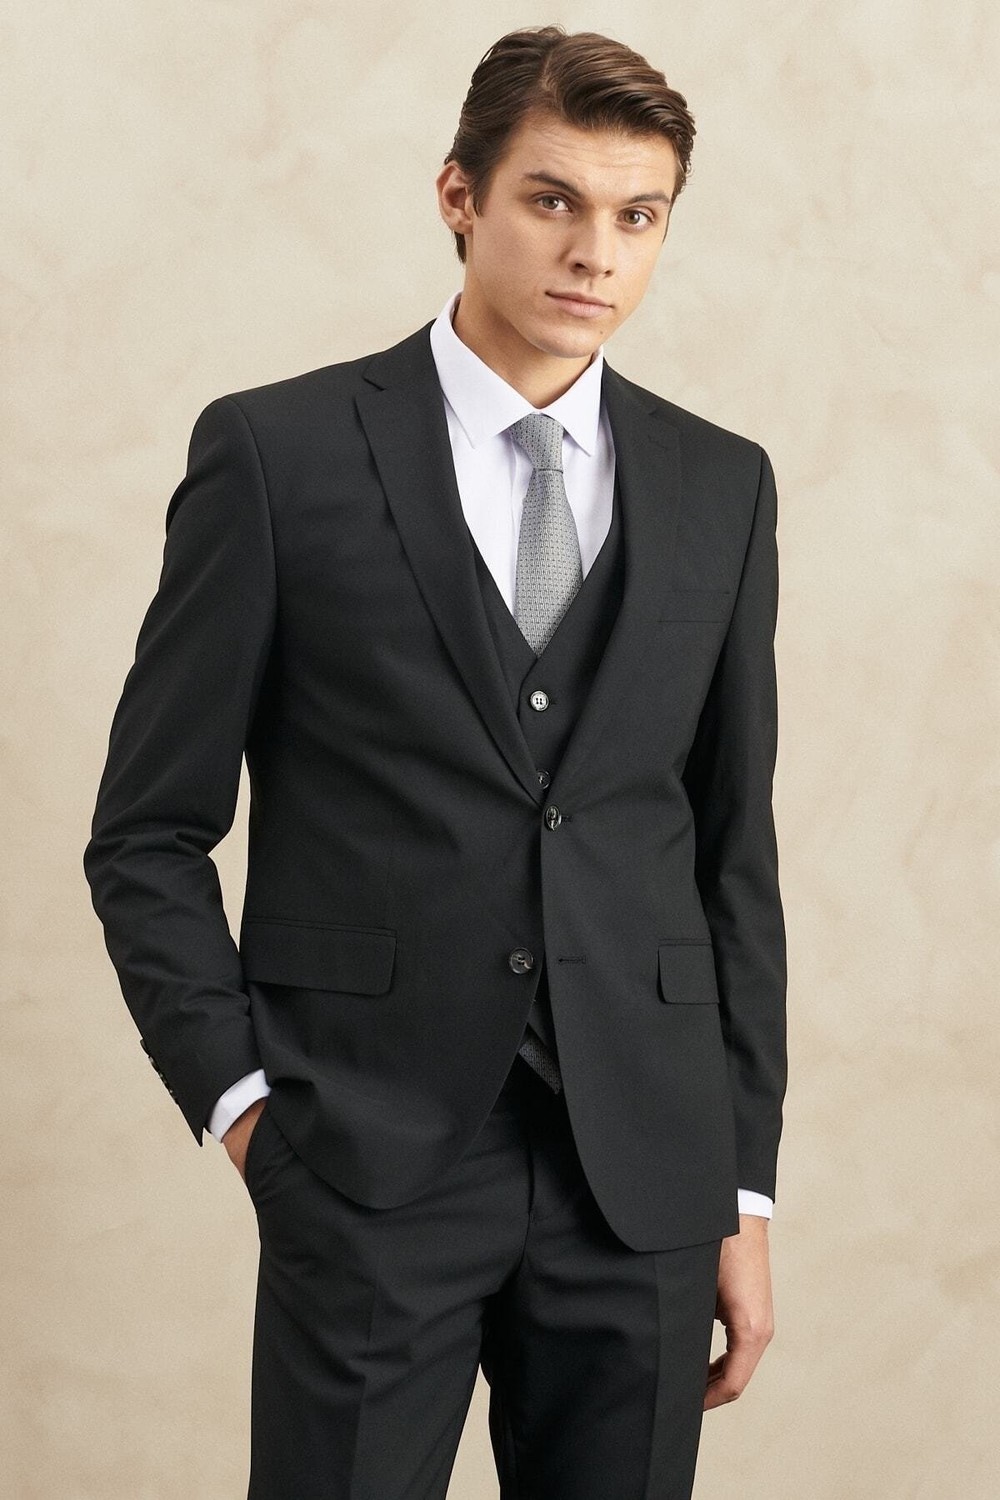 ALTINYILDIZ CLASSICS Men's Black Slim Fit Slim Fit Monocollar Nano Suit With Woolen Vest, which is water and stain resistant.